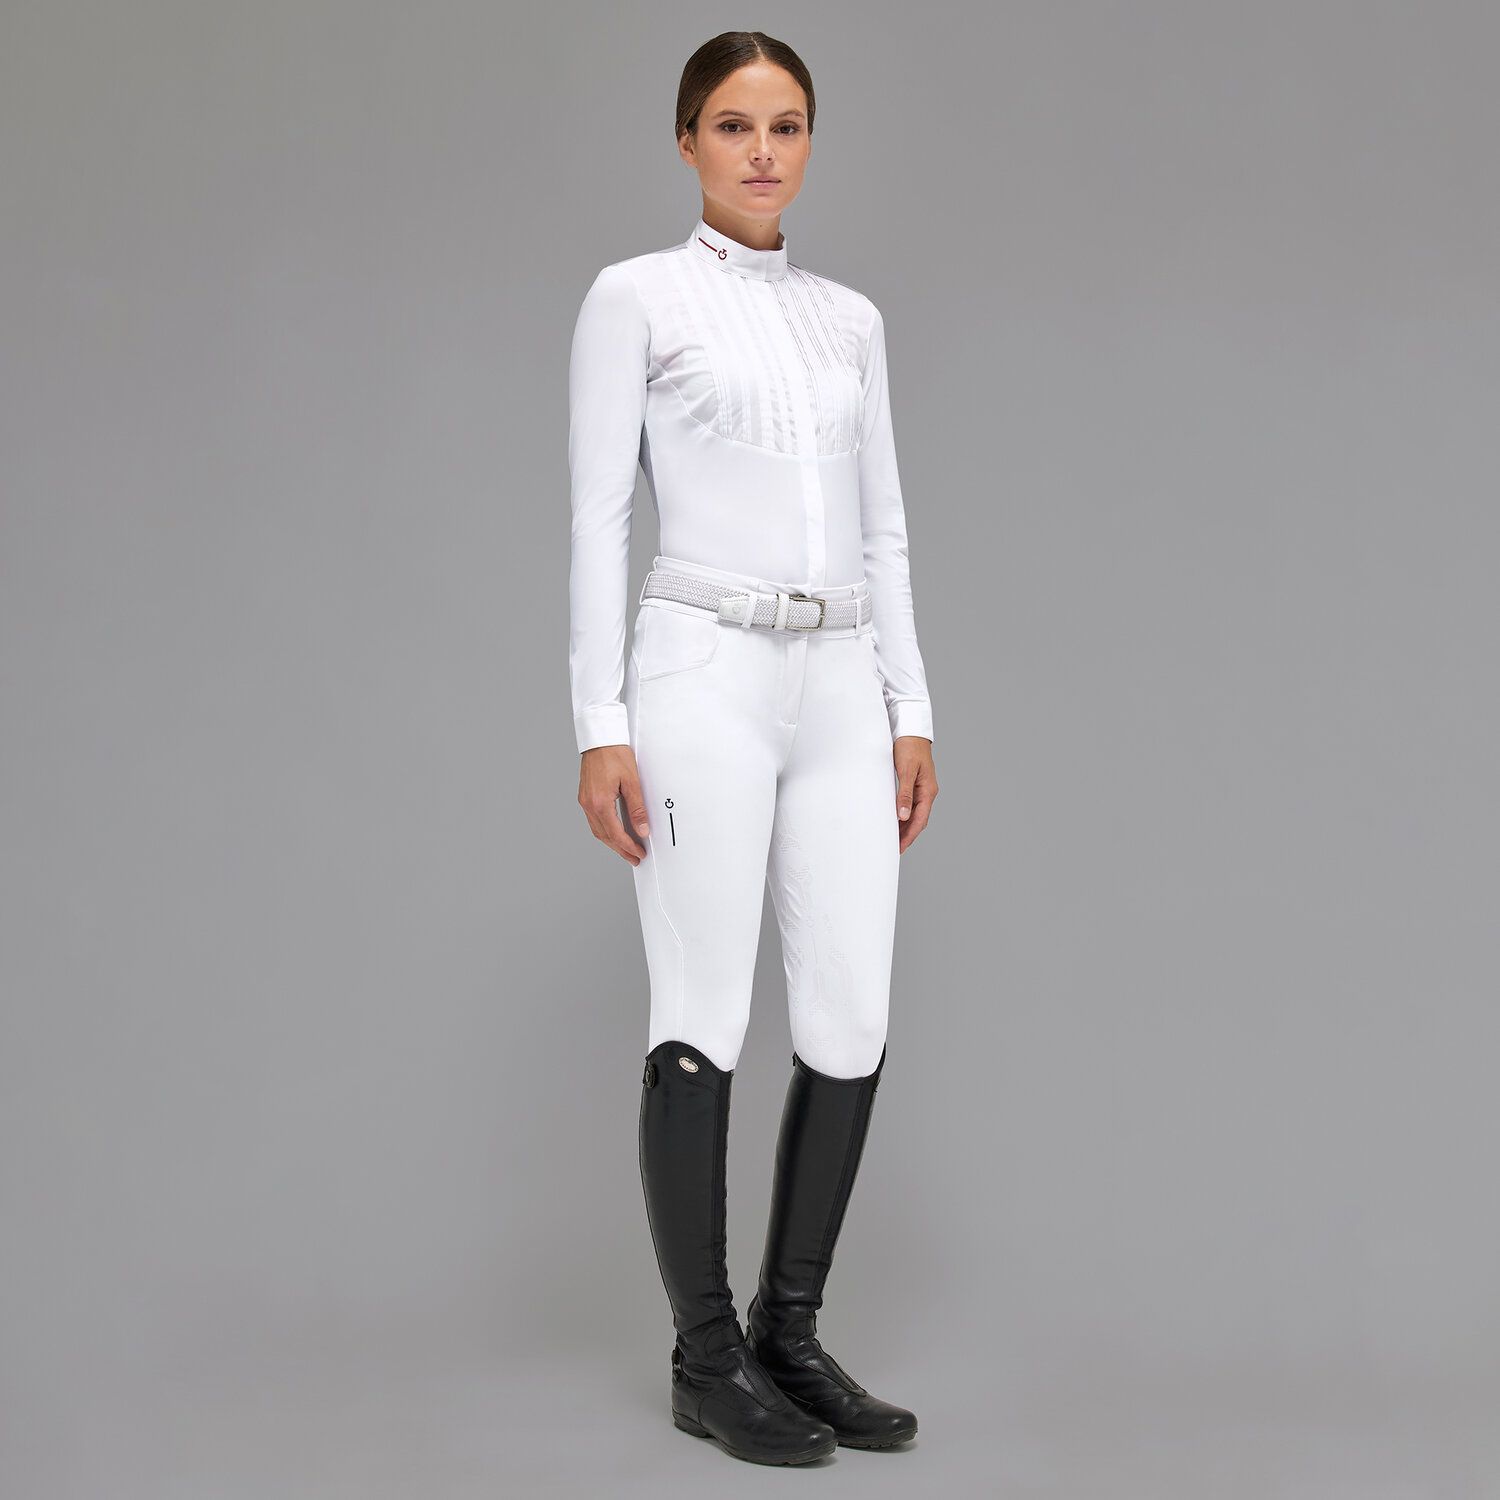 Cavalleria Toscana Women's Revo Jersey Competition Shirt WHITE-2